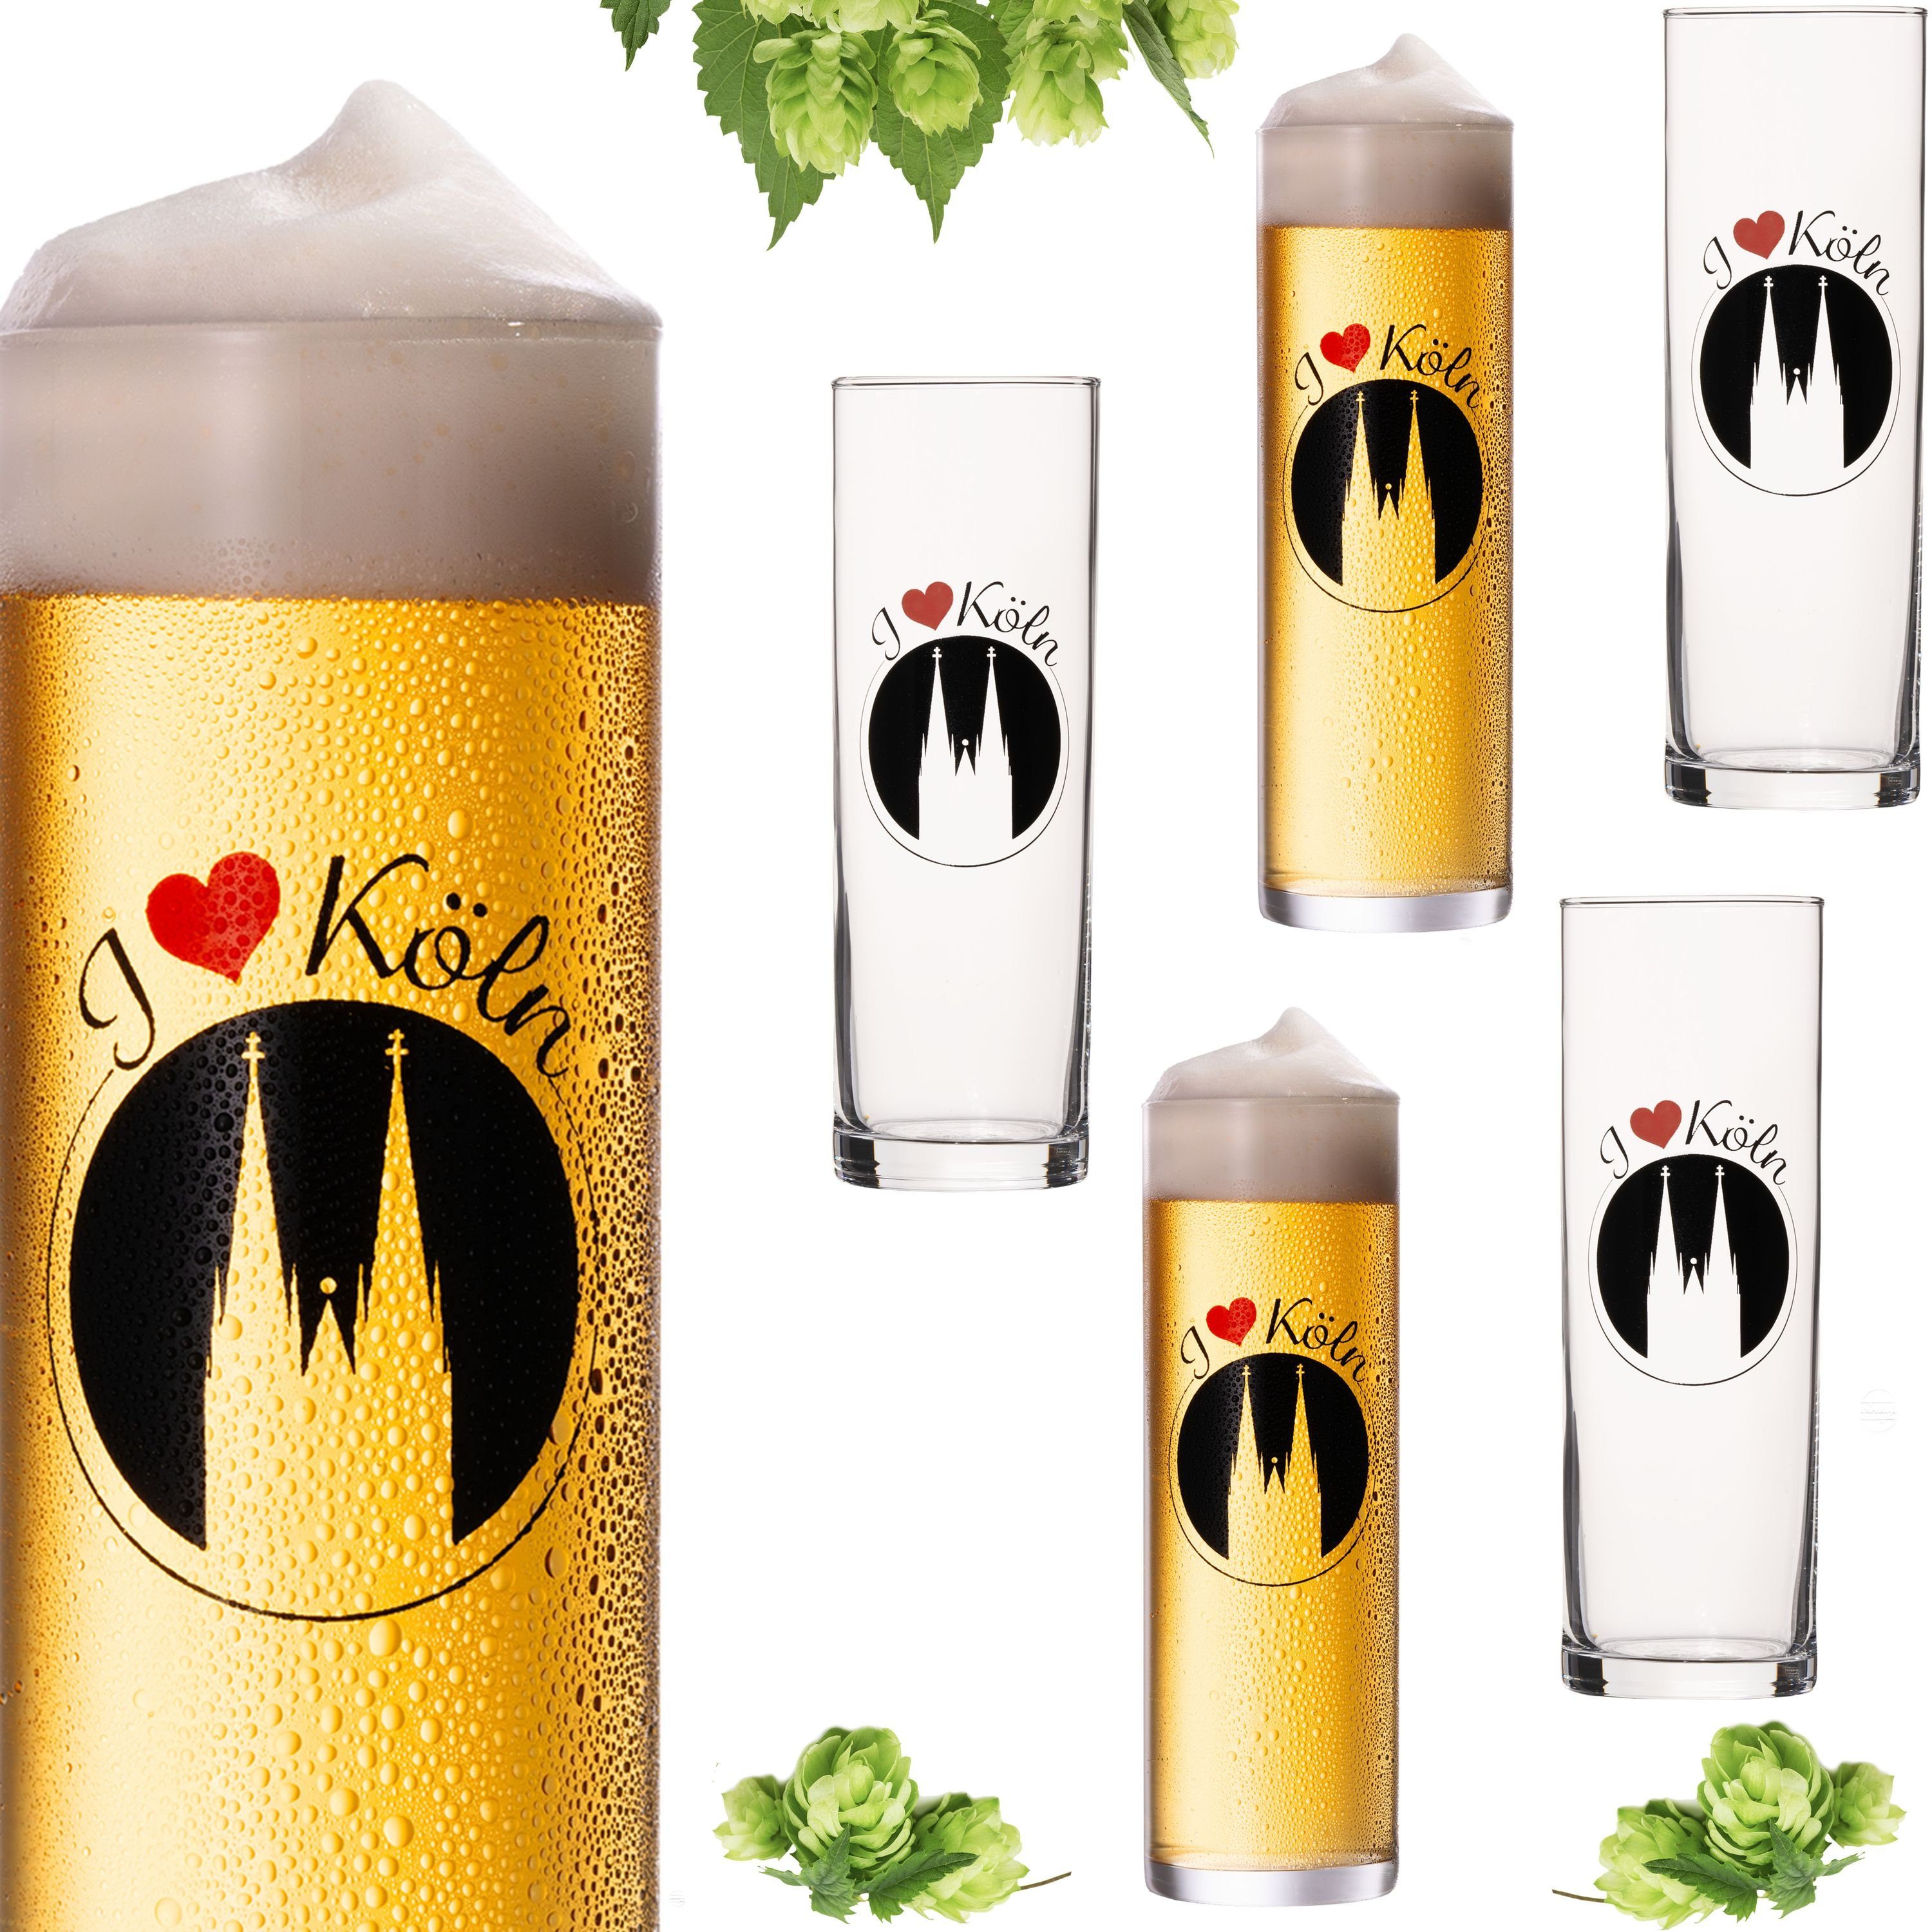 IMPERIAL glass Bierglas Kölschgläser mit Kölner Dom Liebe Motiv 200ml (max. 240ml), Glas, Set 6-Teilig Kölschstangen aus Glas Biergläser Kölngläser